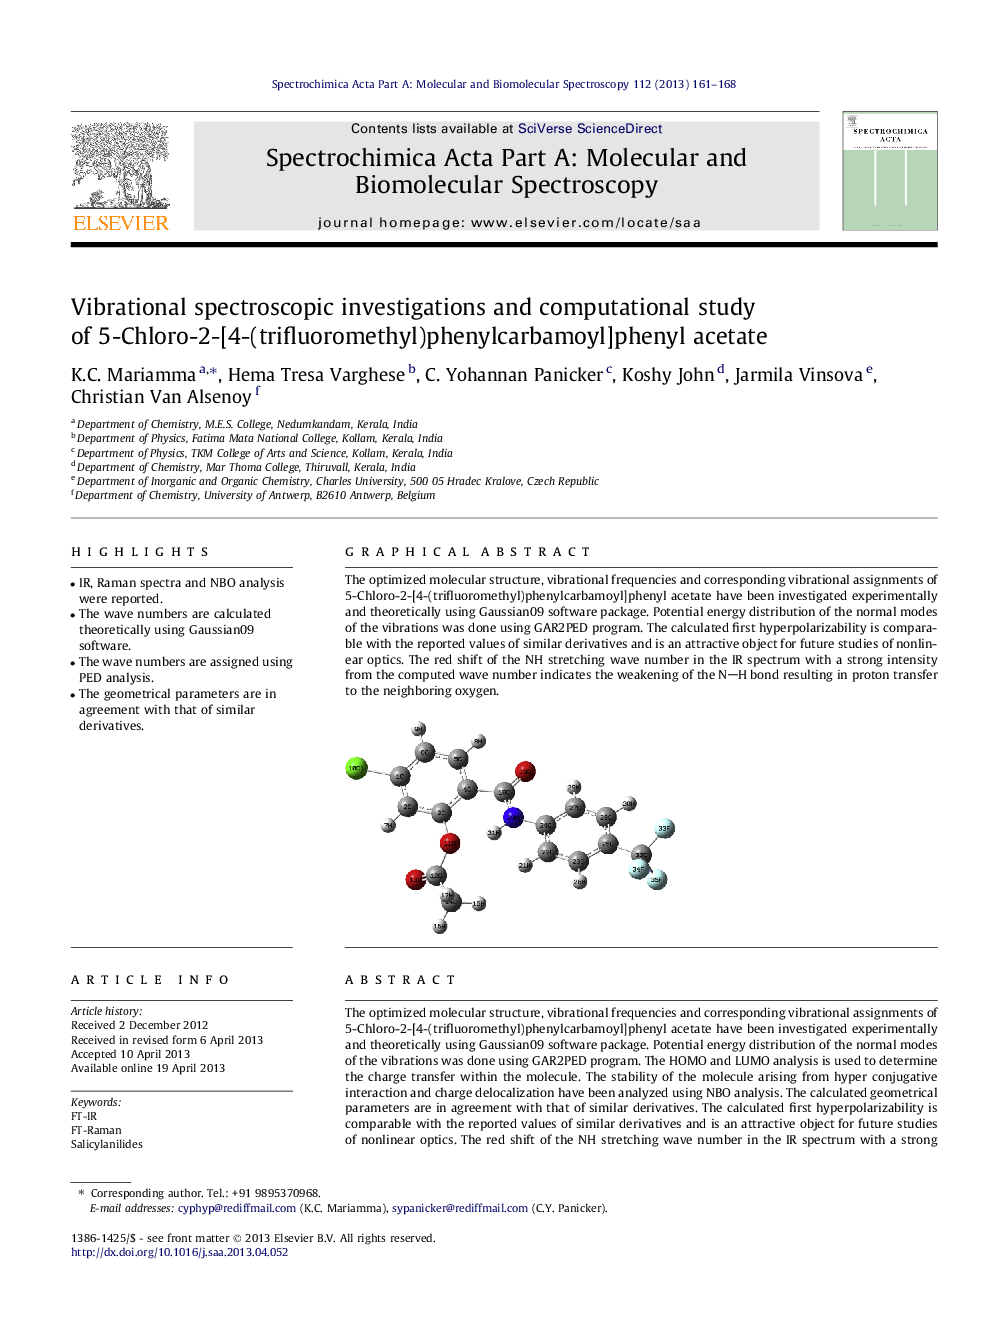 Vibrational spectroscopic investigations and computational study of 5-Chloro-2-[4-(trifluoromethyl)phenylcarbamoyl]phenyl acetate